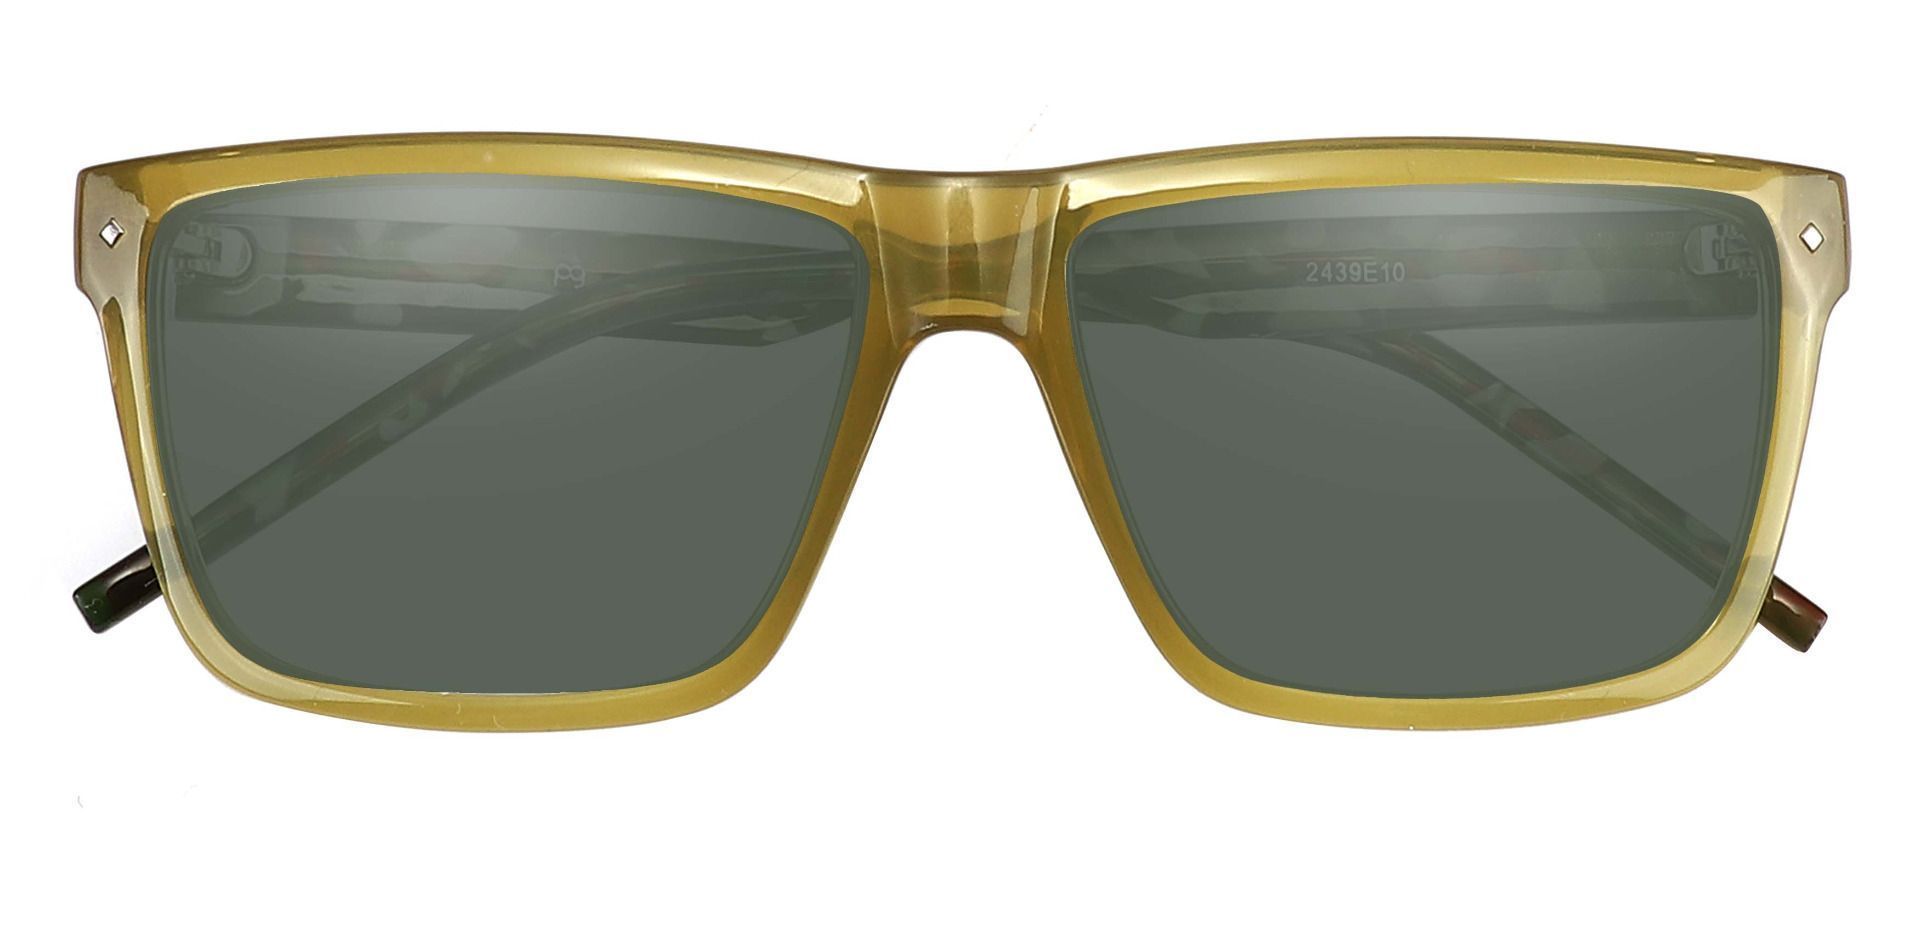 Marietta Rectangle Lined Bifocal Sunglasses - Green Frame With Green Lenses